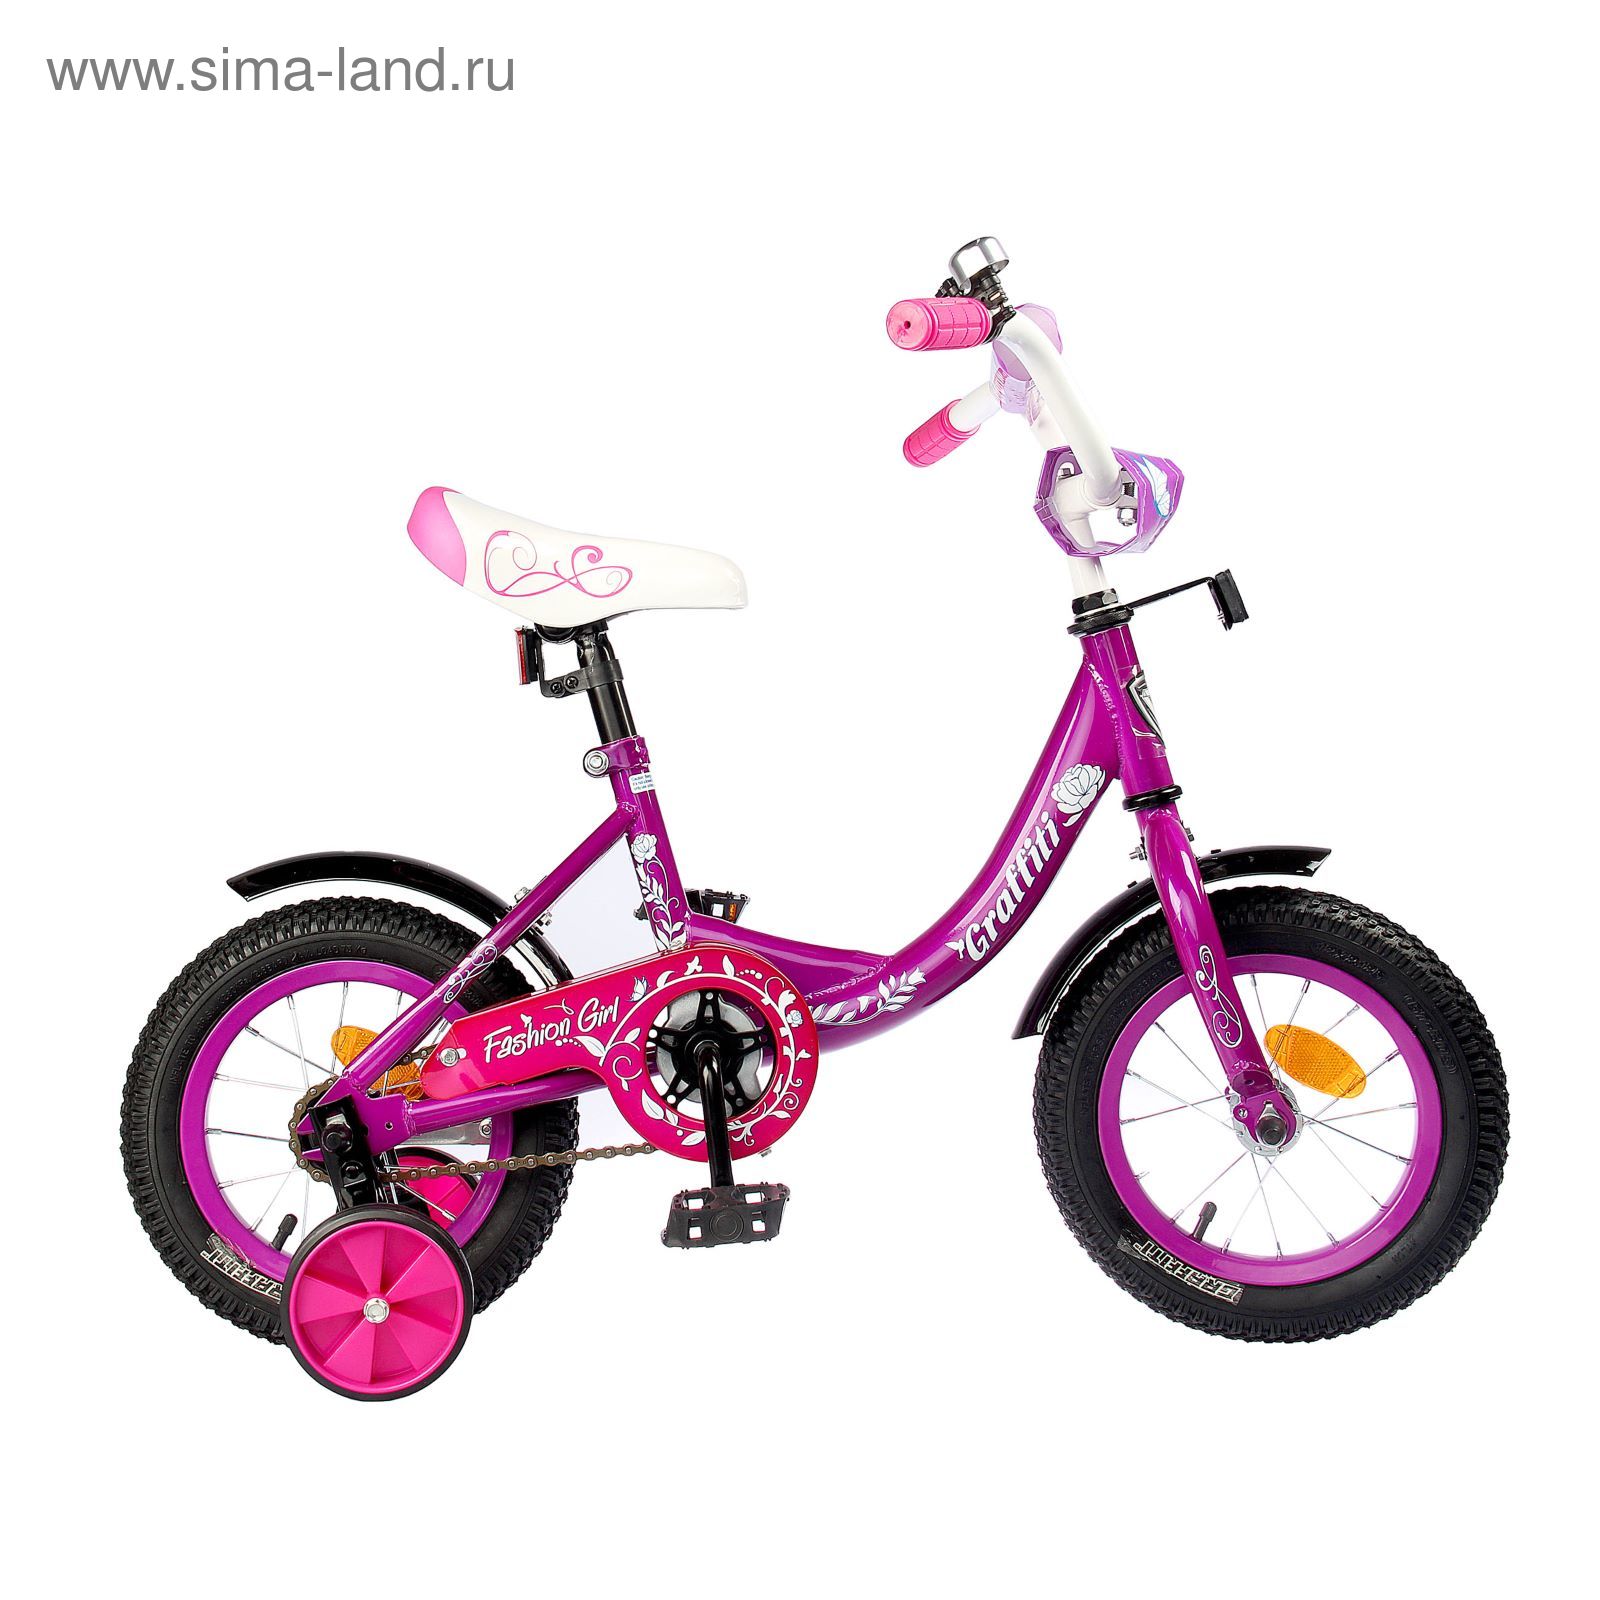 Велосипед 12" GRAFFITI Fashion Girl RUS, 2017, цвет фиолетовый